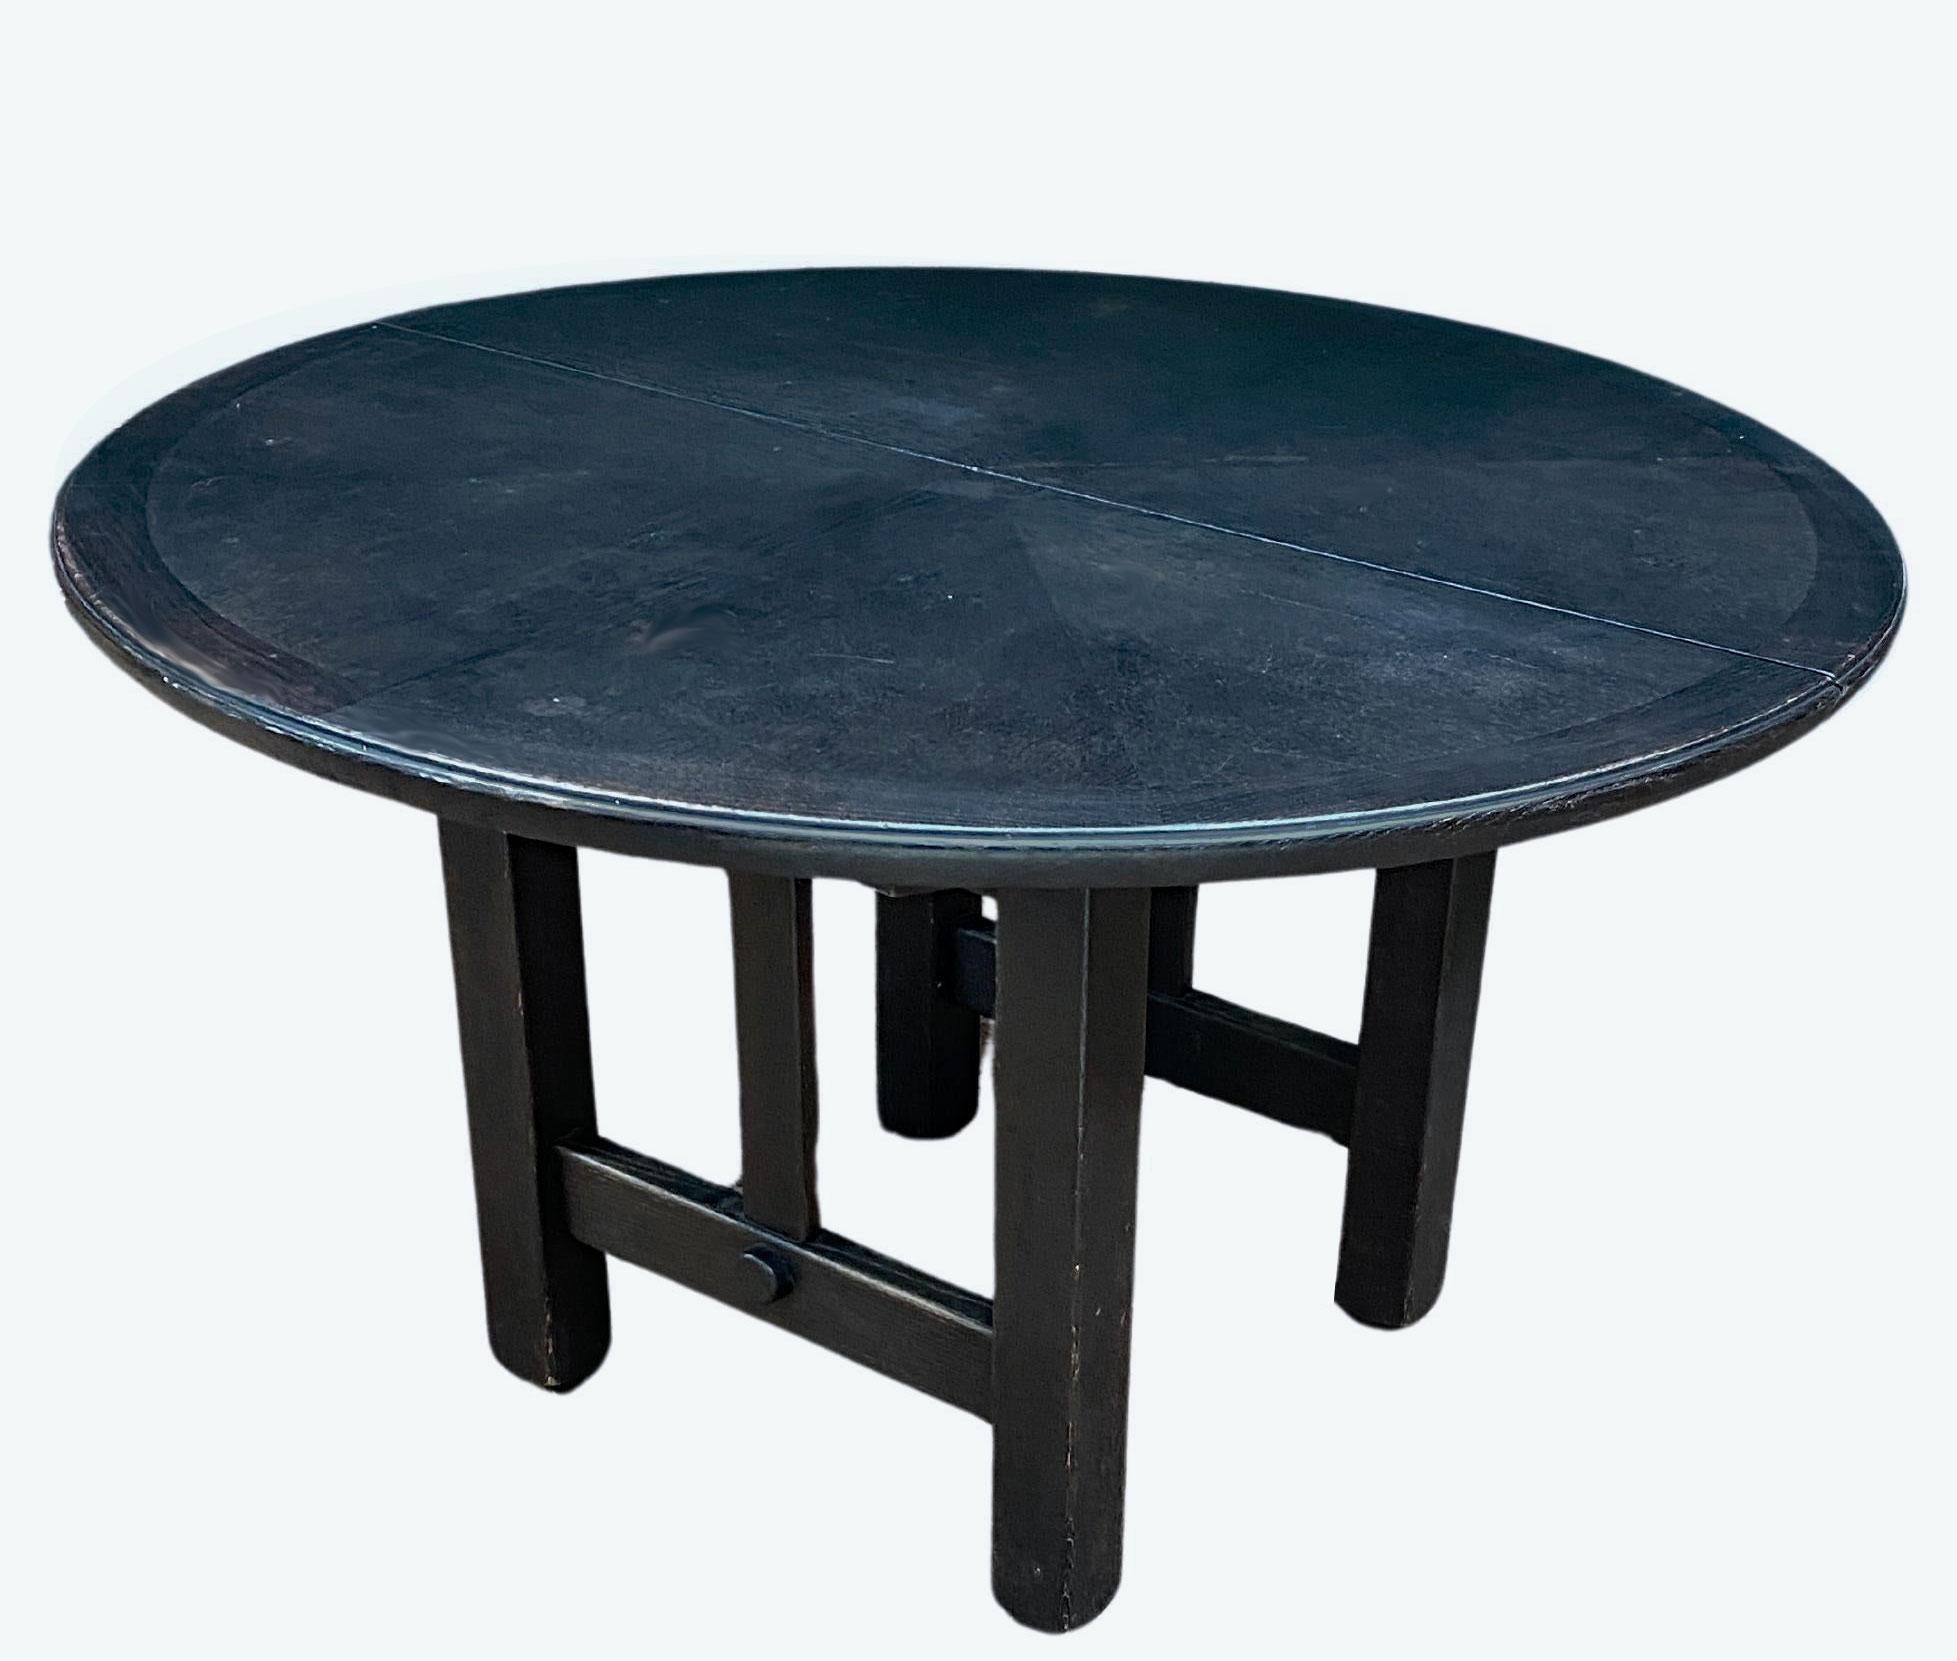  Guillerme et Chambron dining table in blackened oak, Edition Votre Maison circa